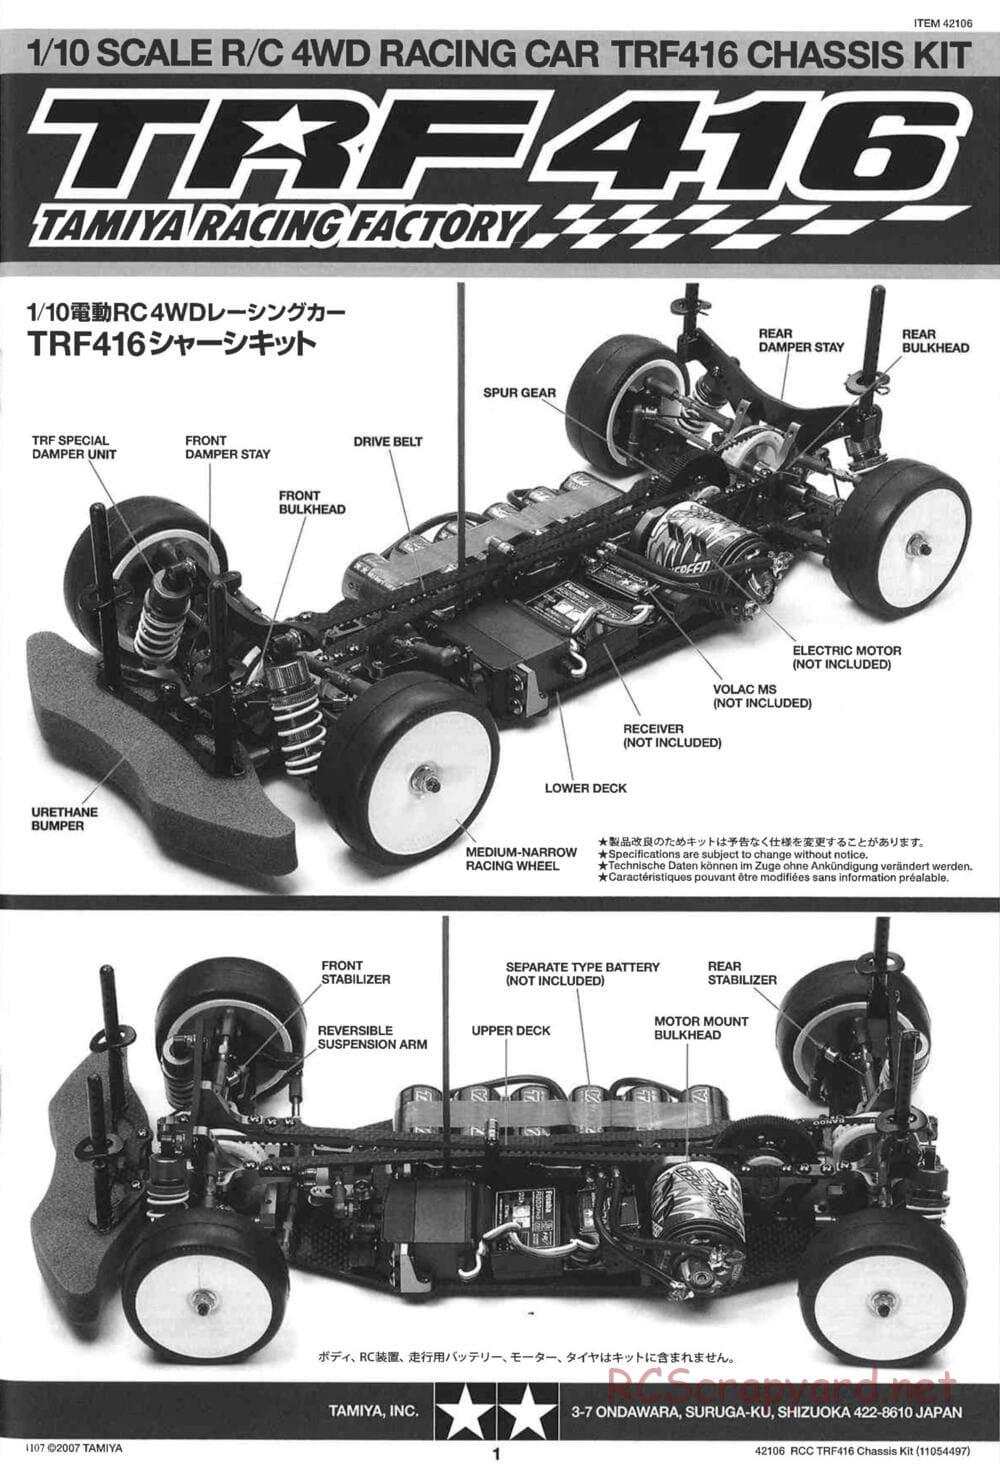 Tamiya - TRF416 Chassis - Manual - Page 1